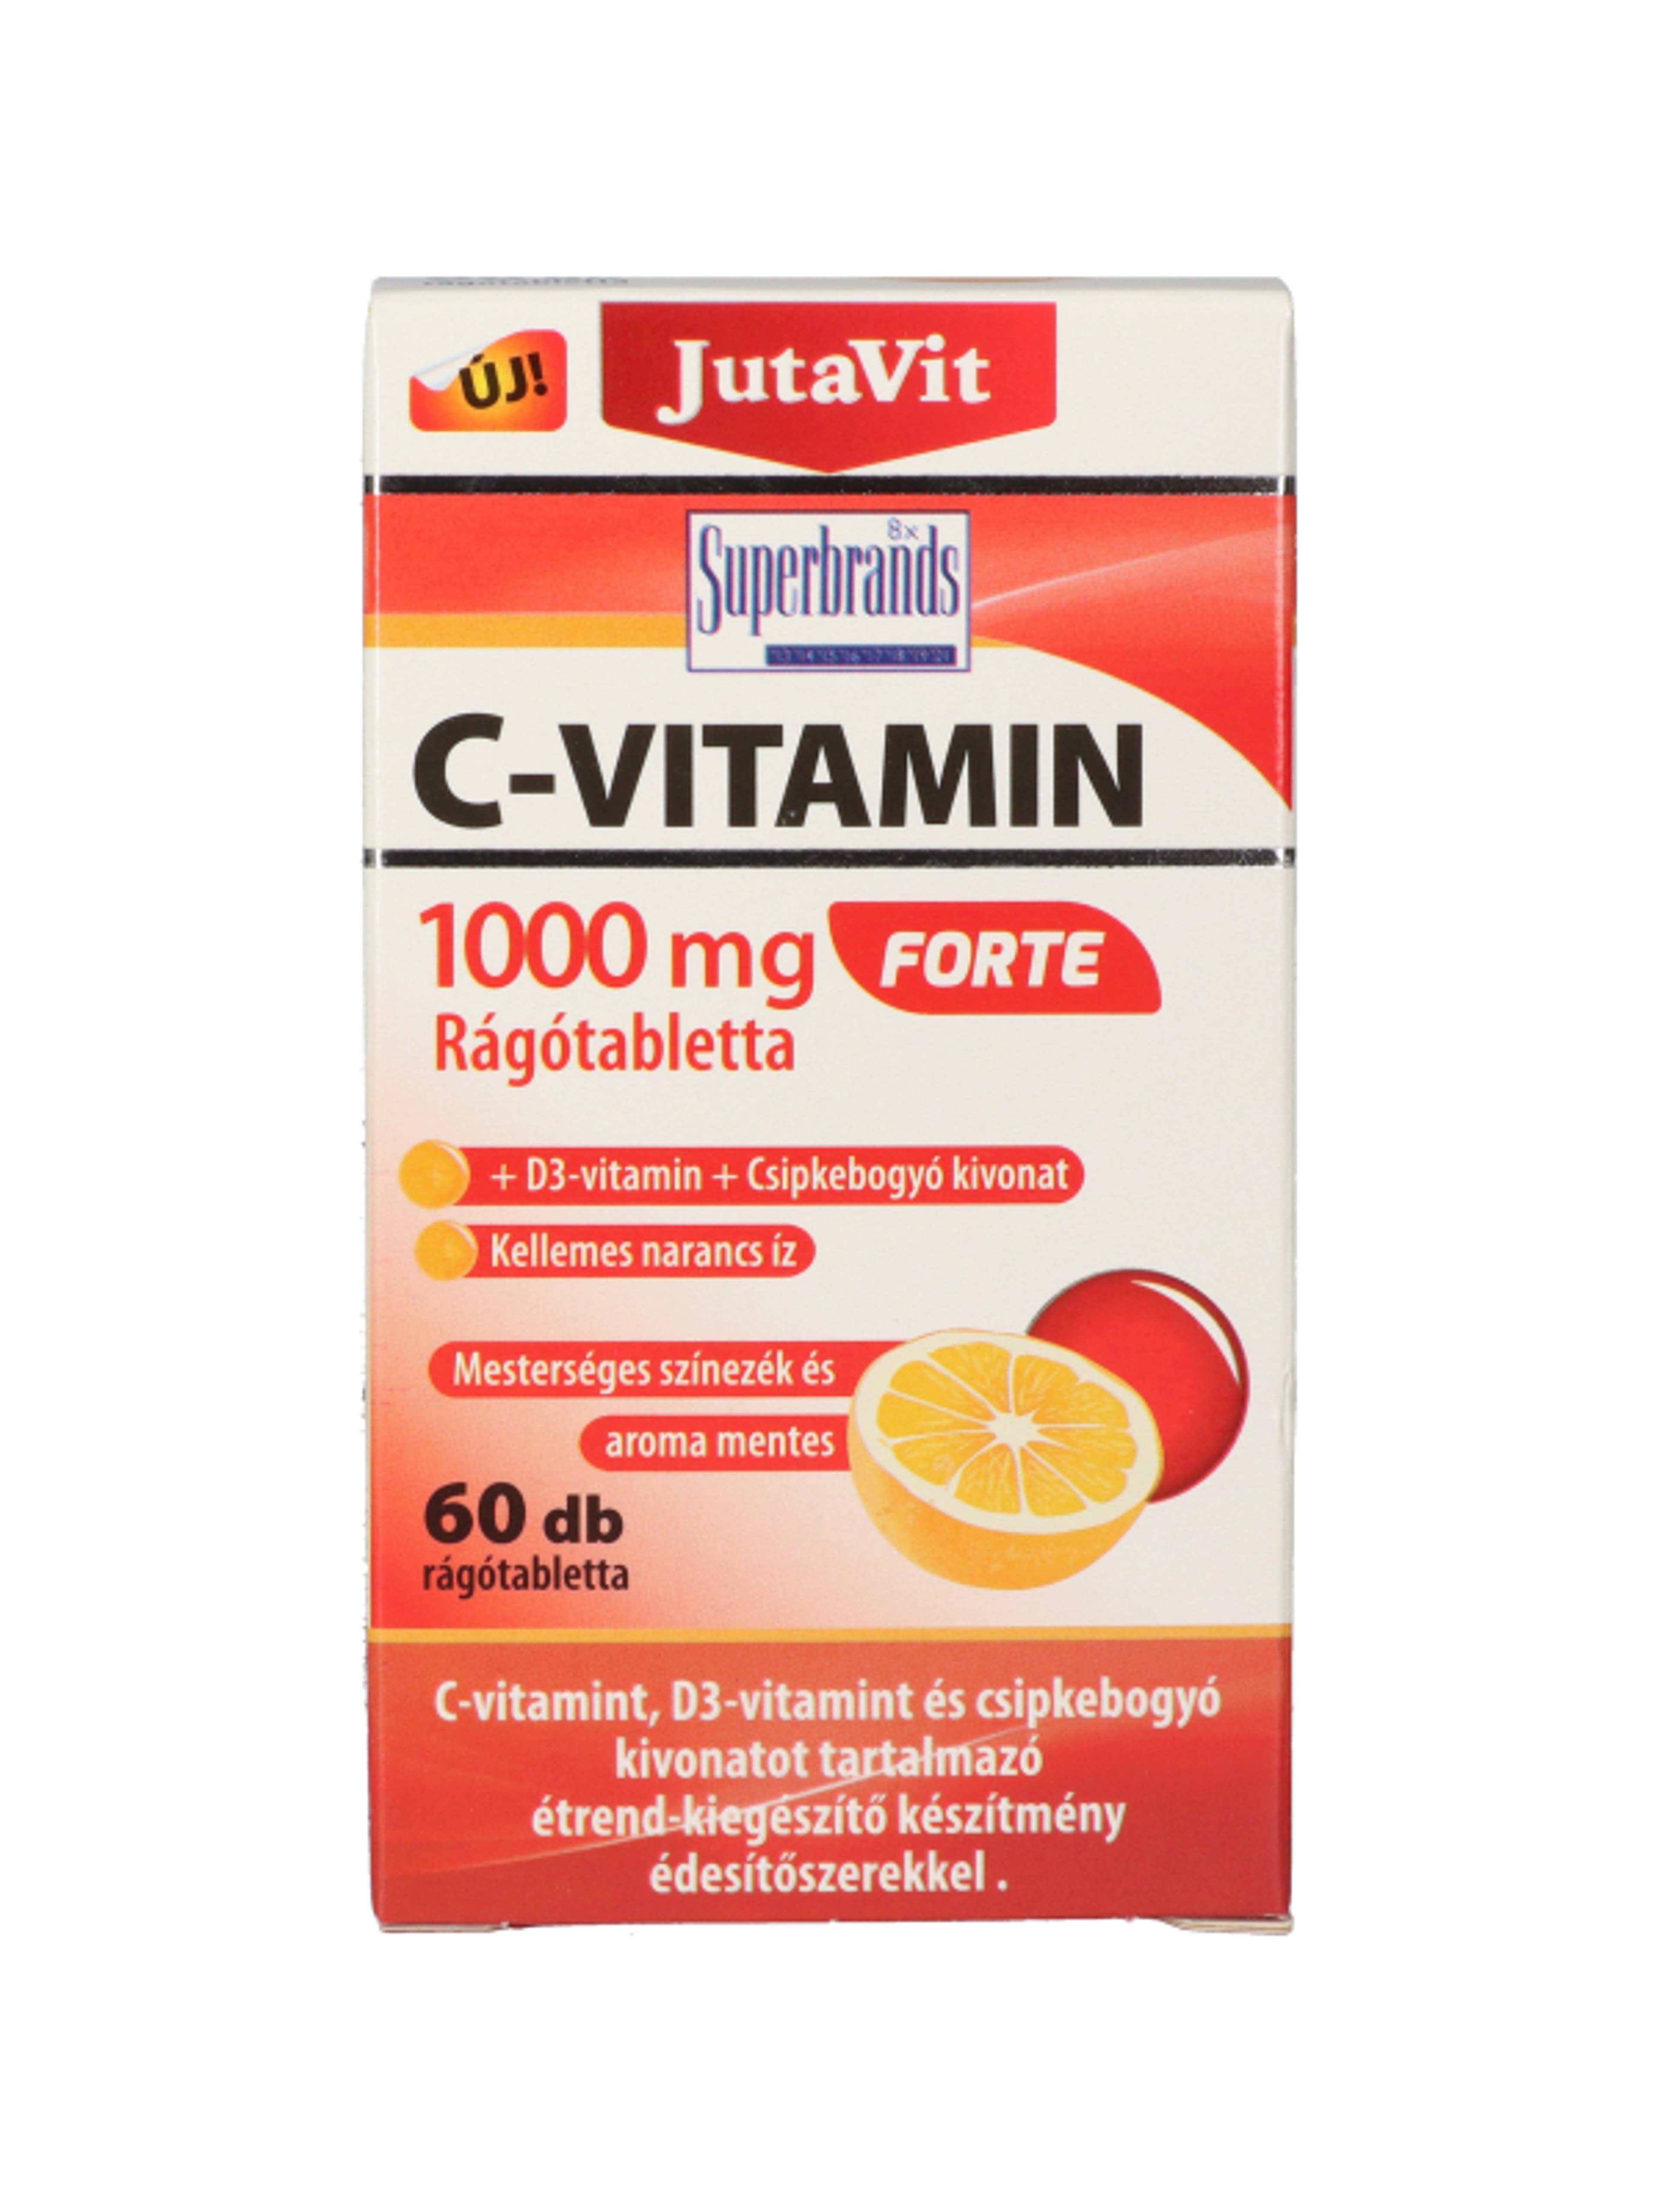 JutaVit C-vitamin Forte 1000 mg étrend-kiegészítő rágótabletta - 60 db-1